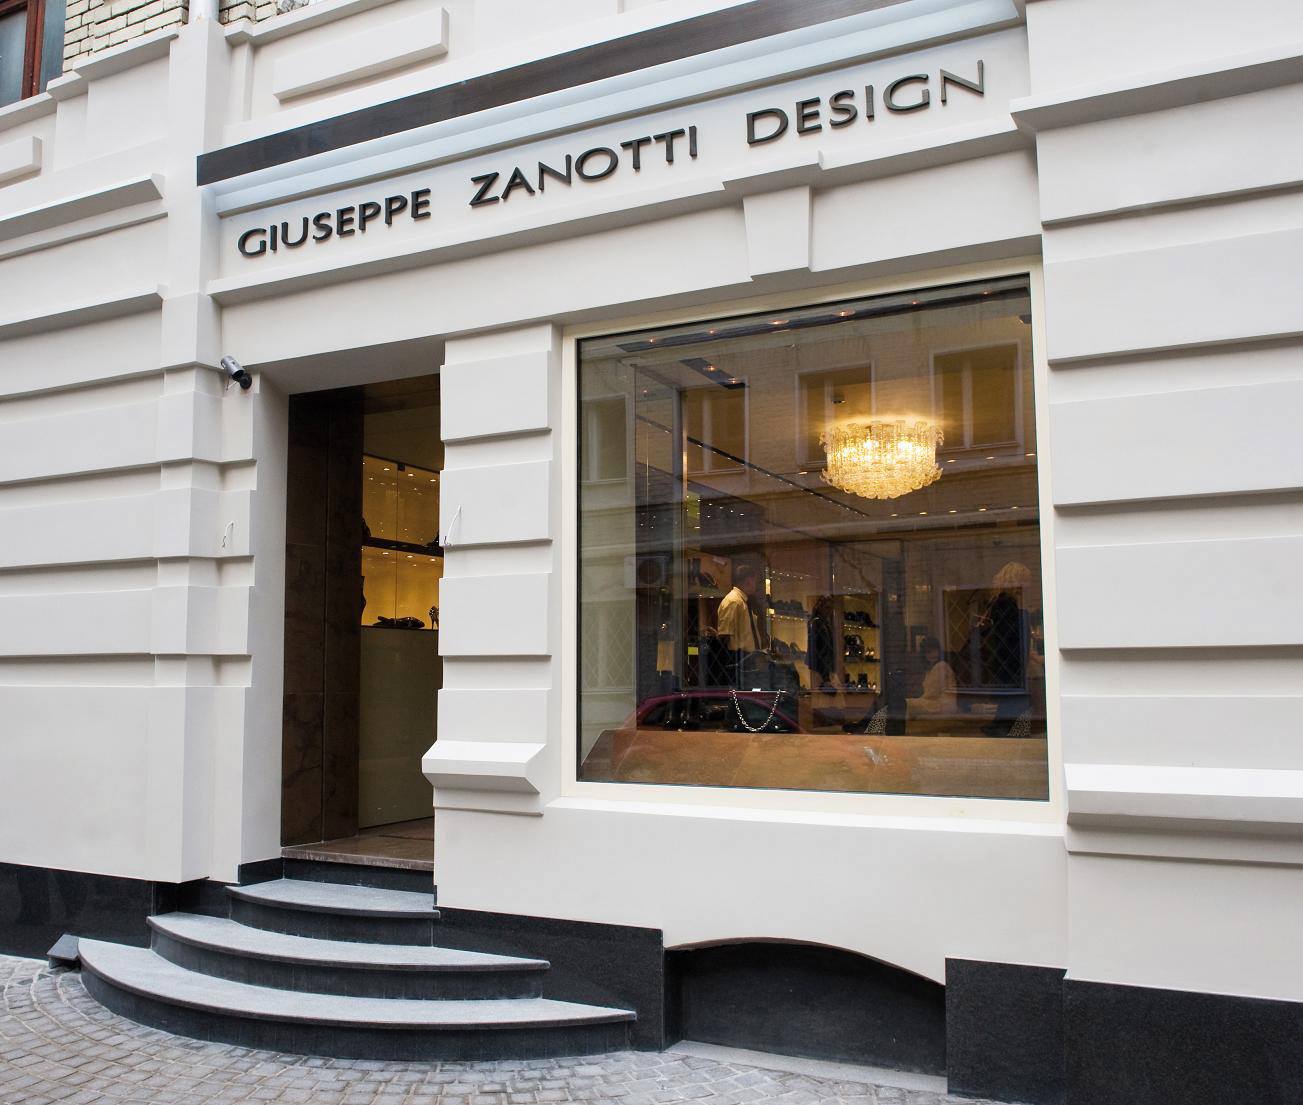 Giuseppe Zanotti Design kronwell luce light